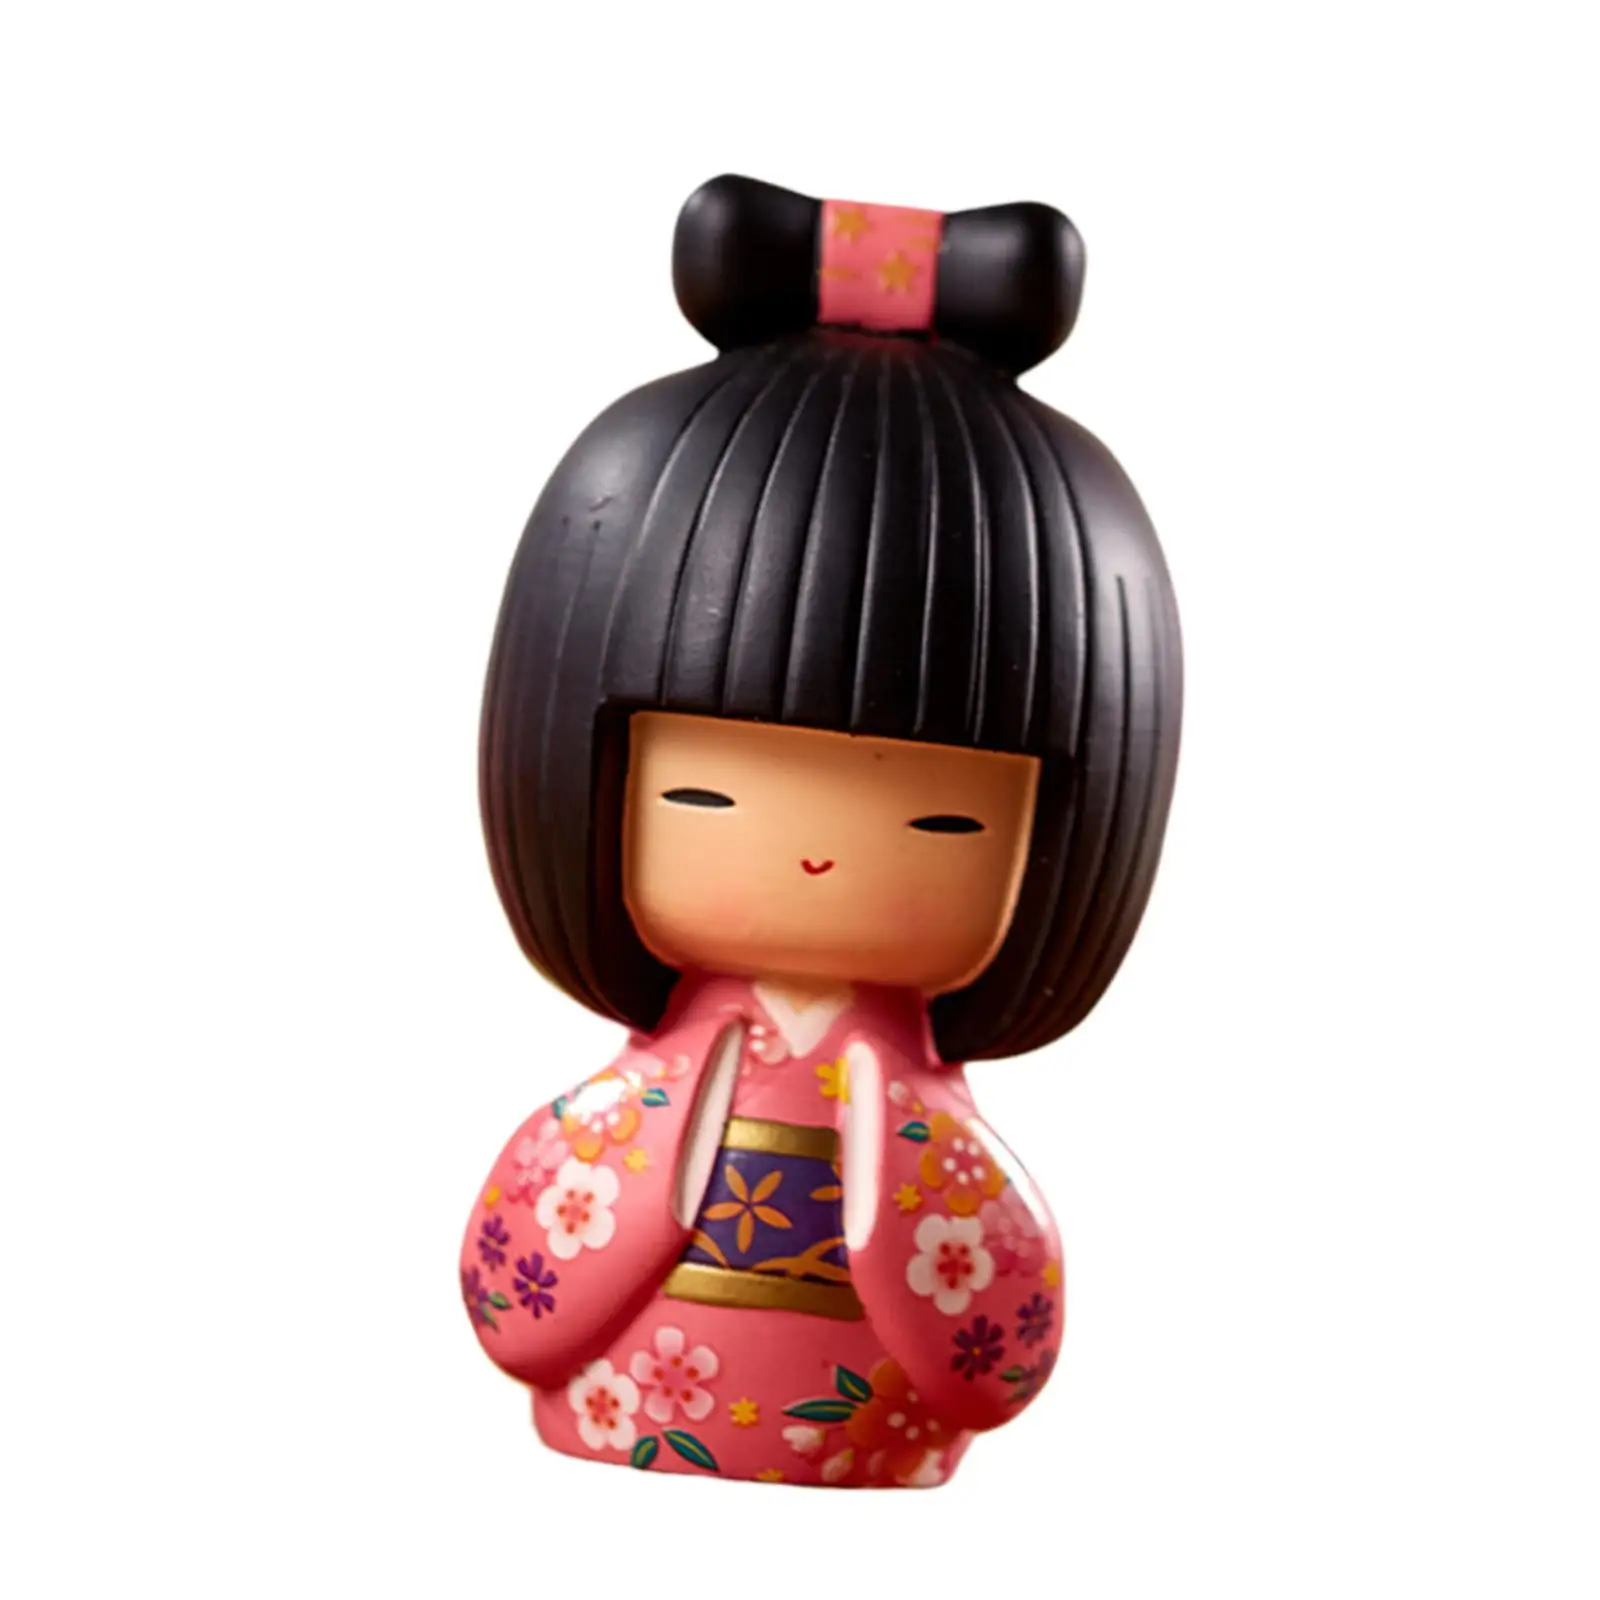 Kokeshi Dolls Statues Novelty Figure Kimono Women Traditional Craft Doll for